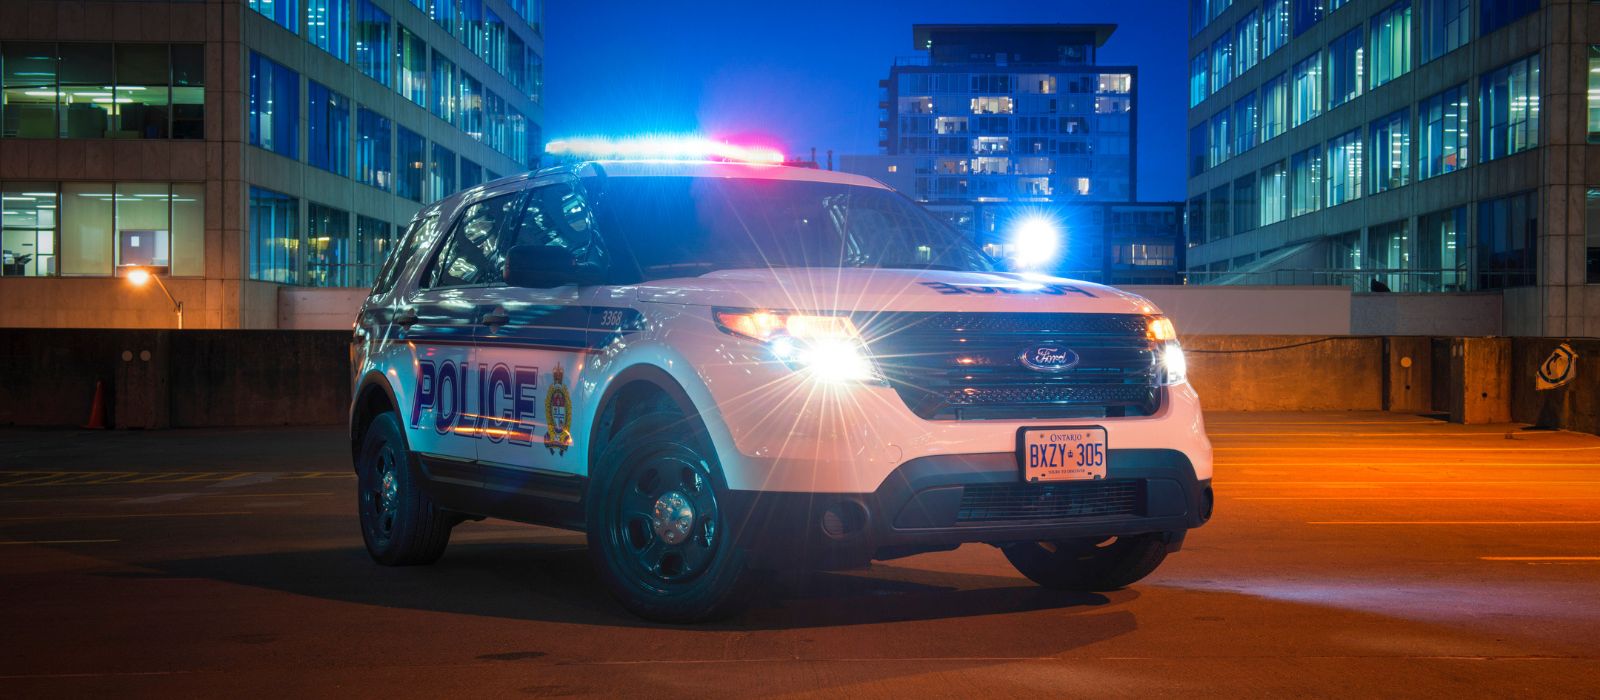 Ottawa Police cruiser at night with lights on